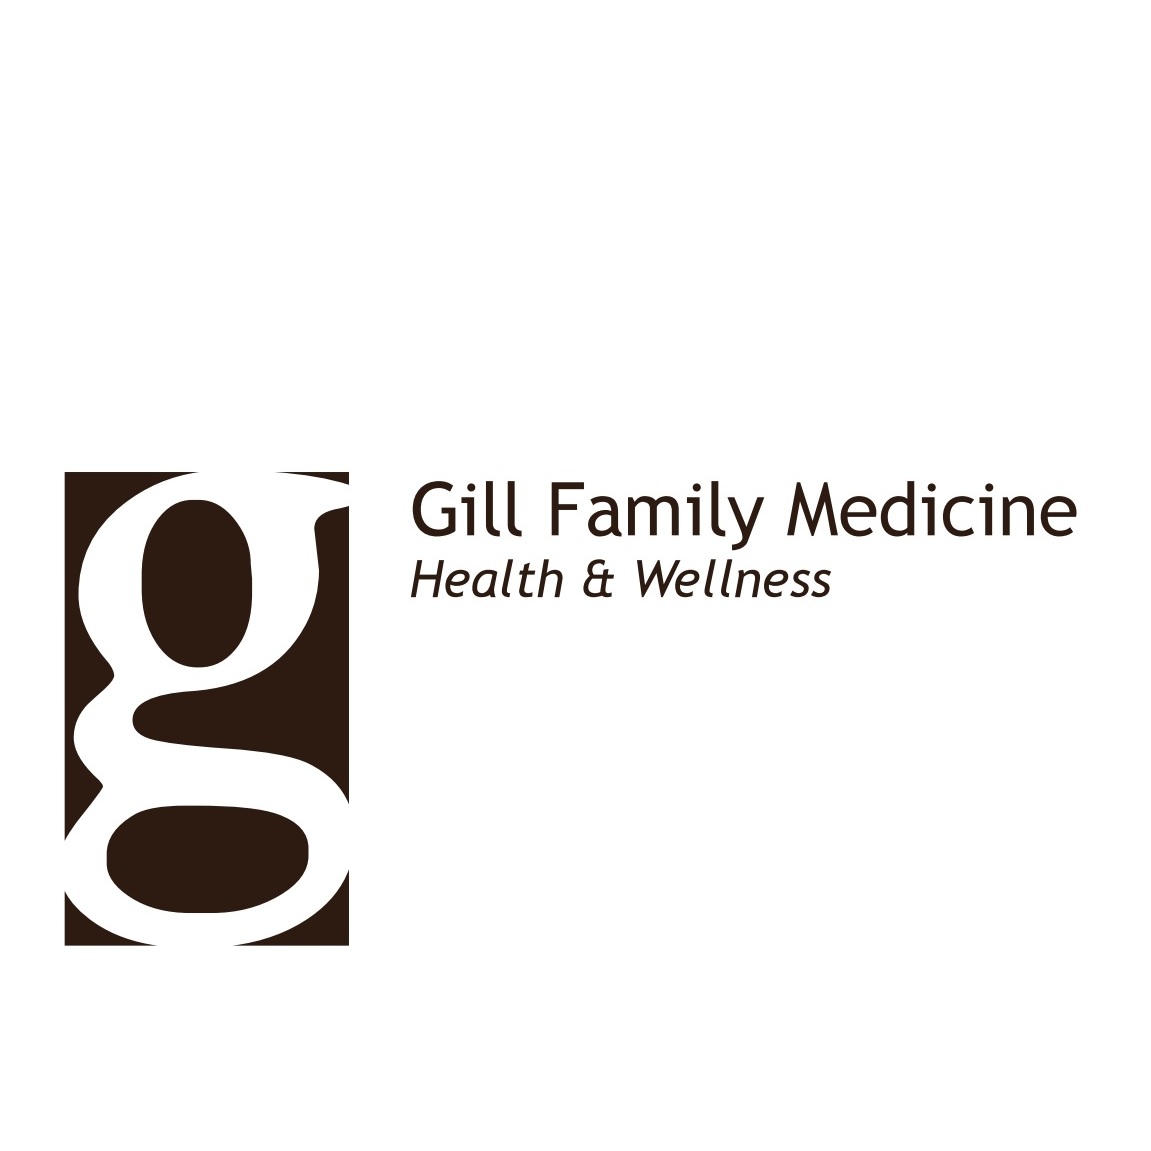 Gill Family Medicine